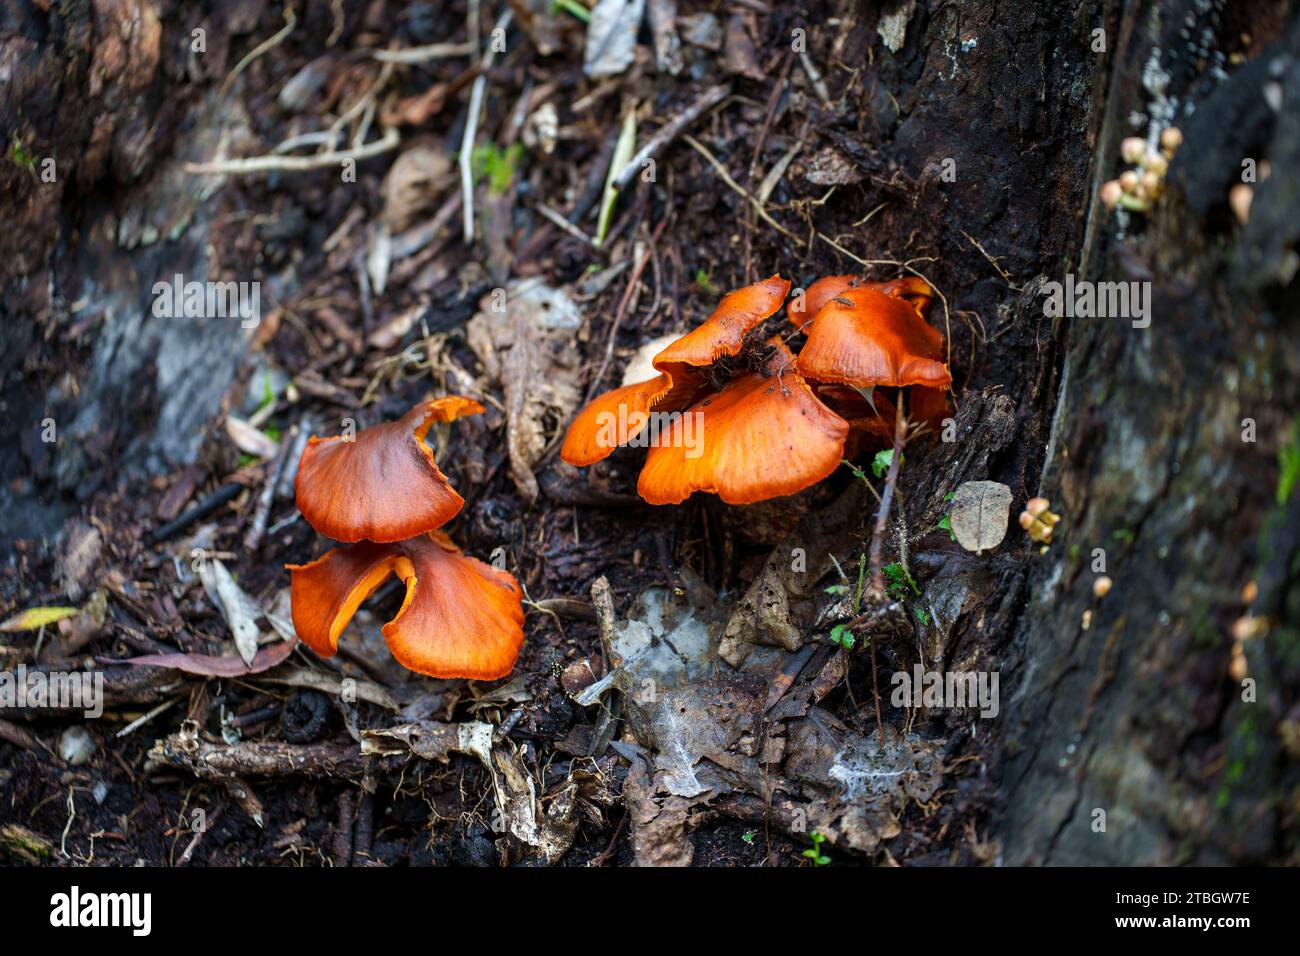 Wild mushrooms growing on a tree trunk Stock Photo